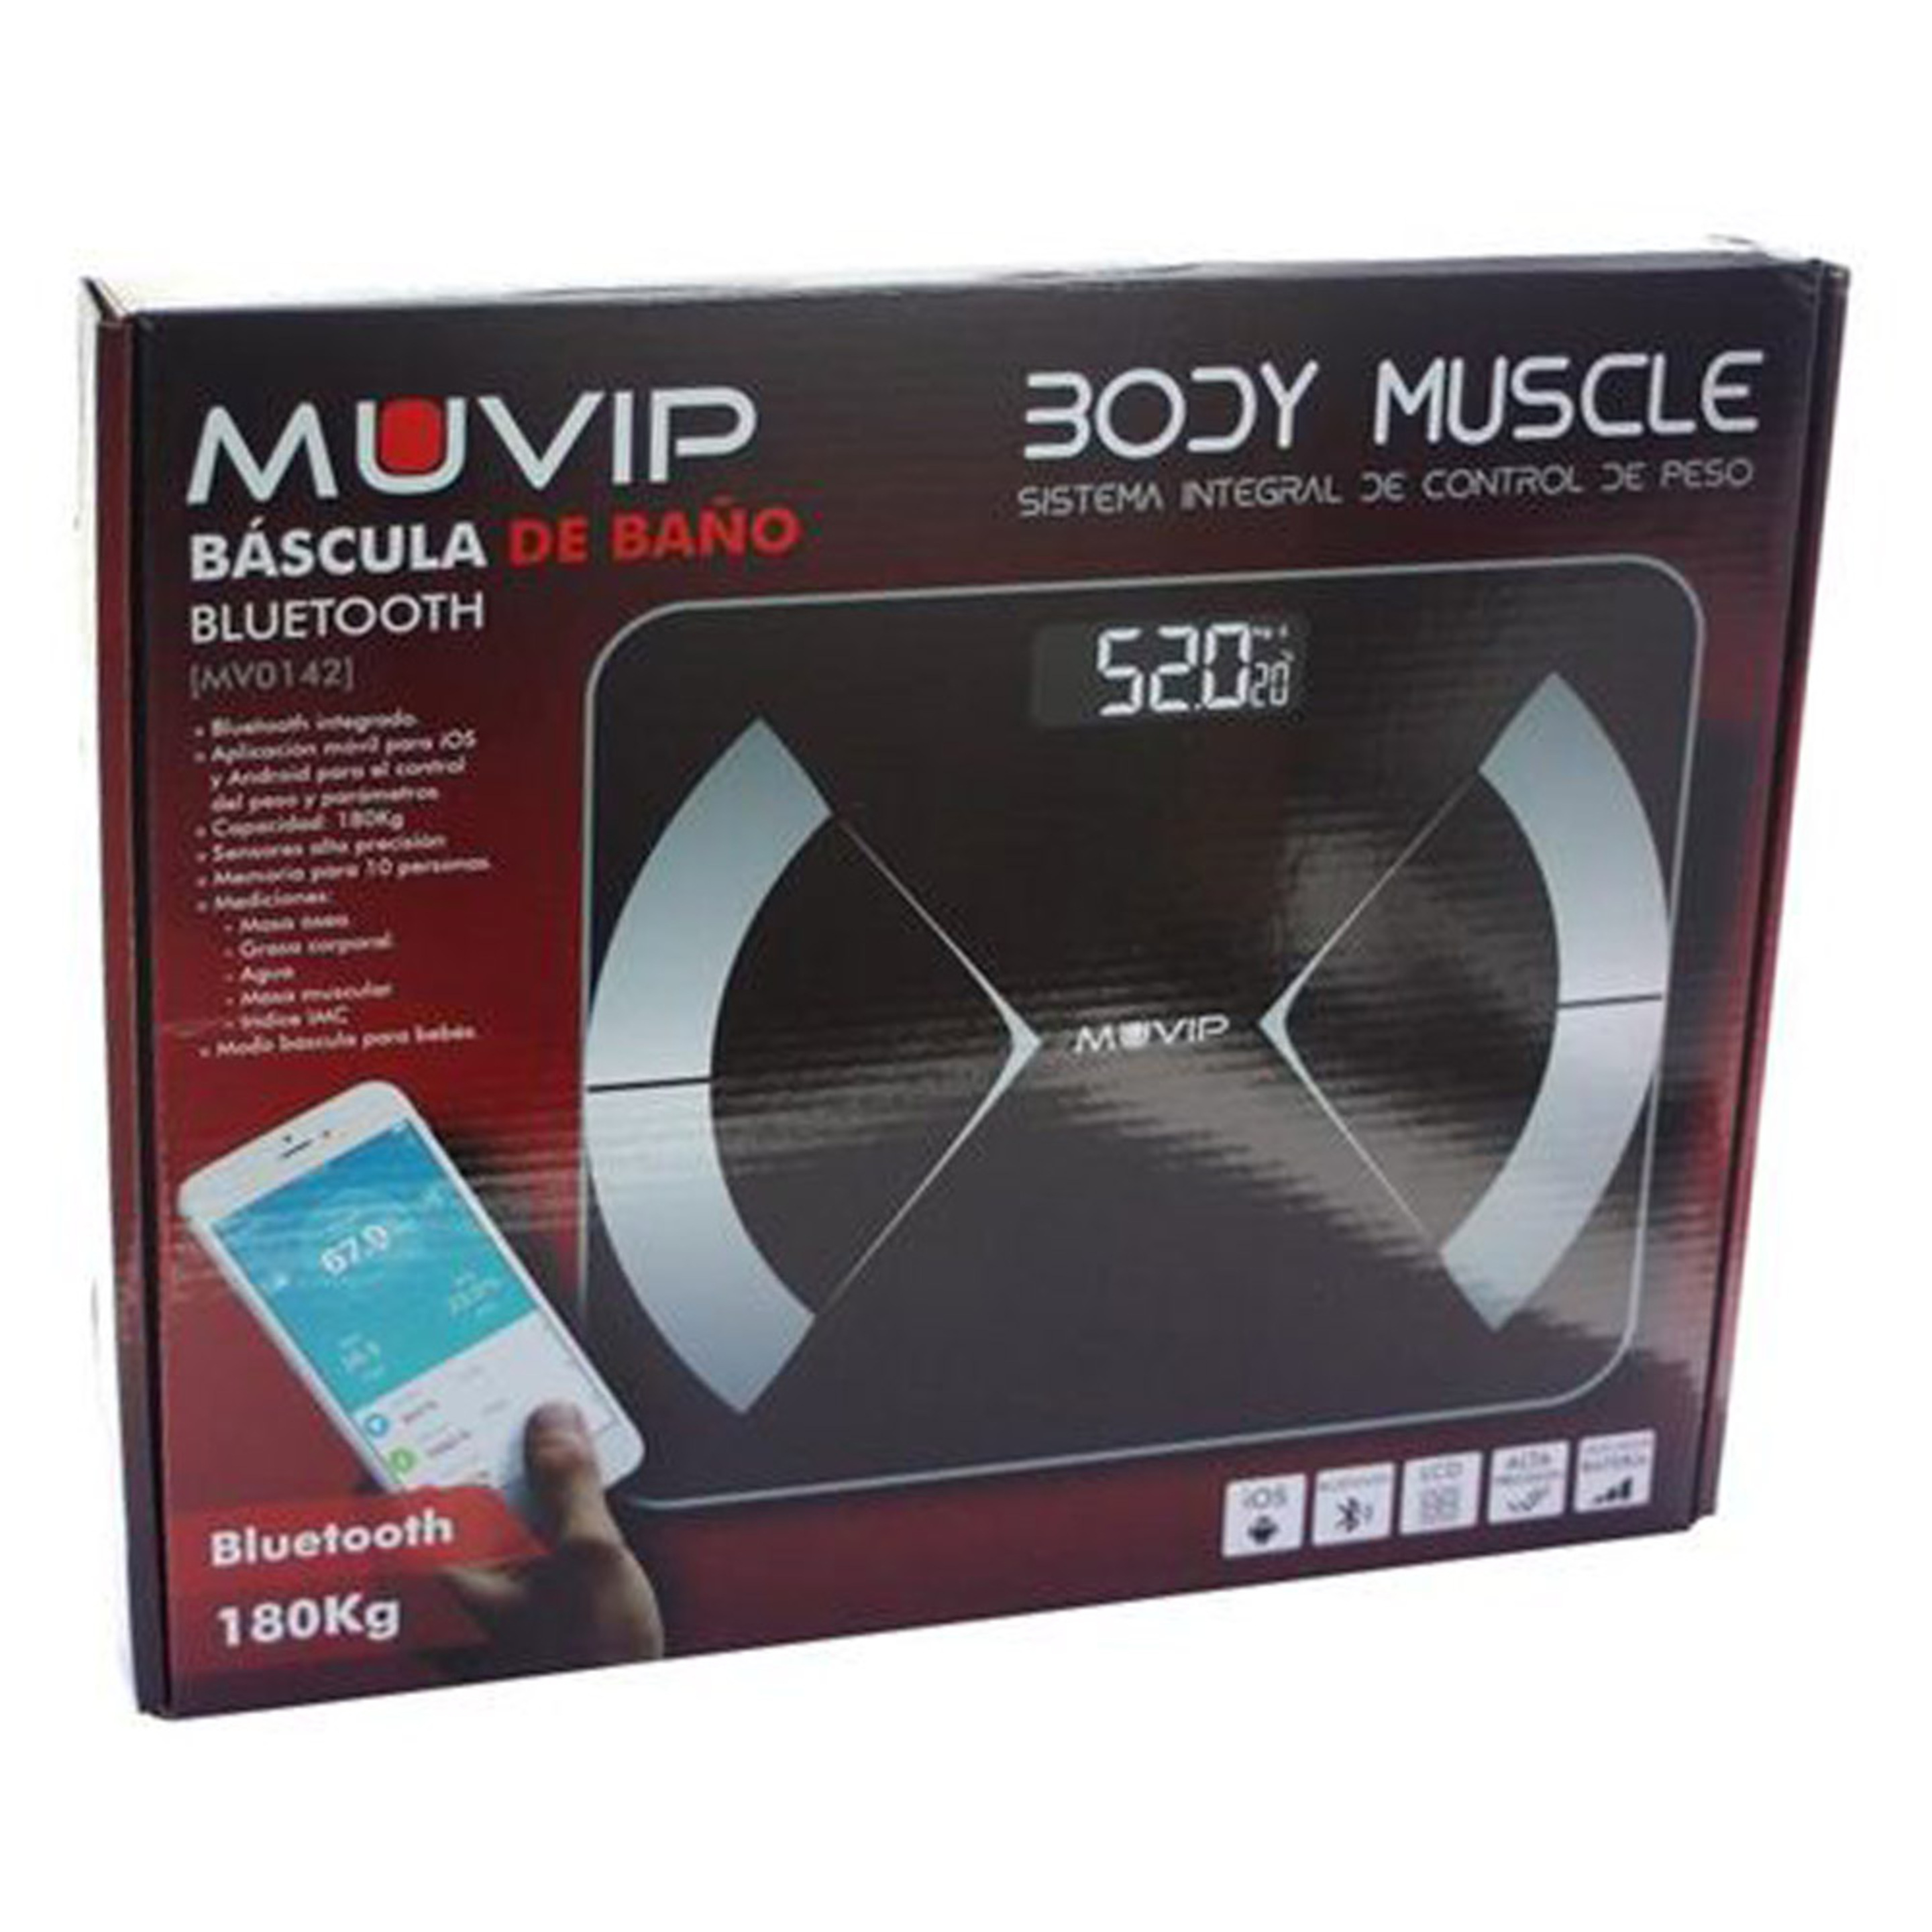 Báscula Digital Body Muscle Bluetooth Muvip